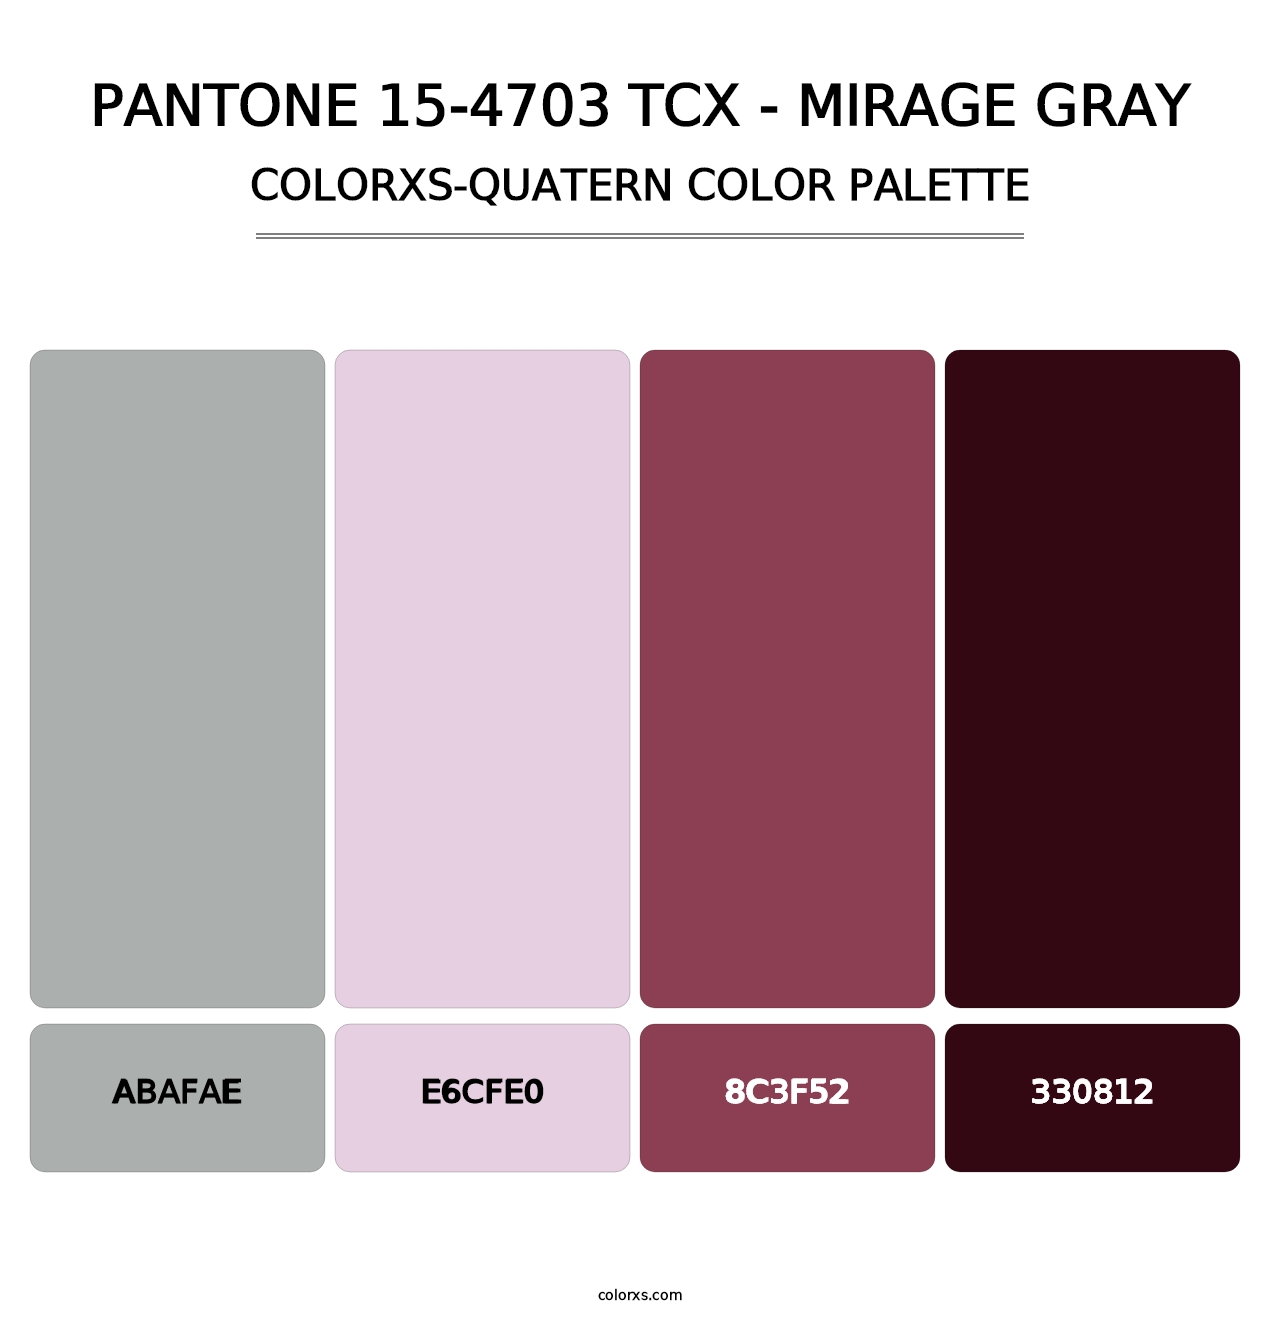 PANTONE 15-4703 TCX - Mirage Gray - Colorxs Quatern Palette